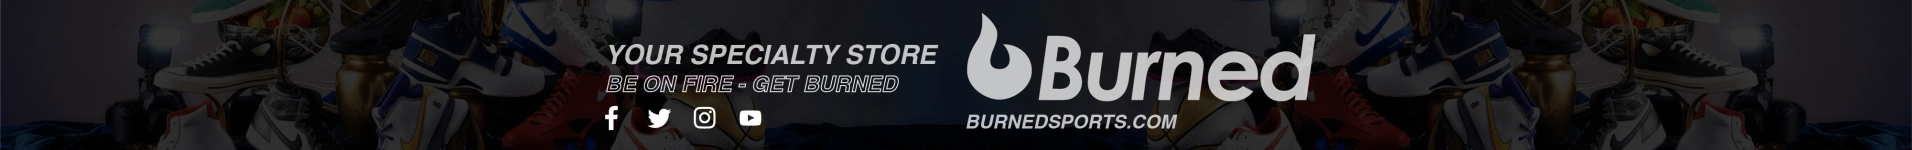 Burned Sportss background